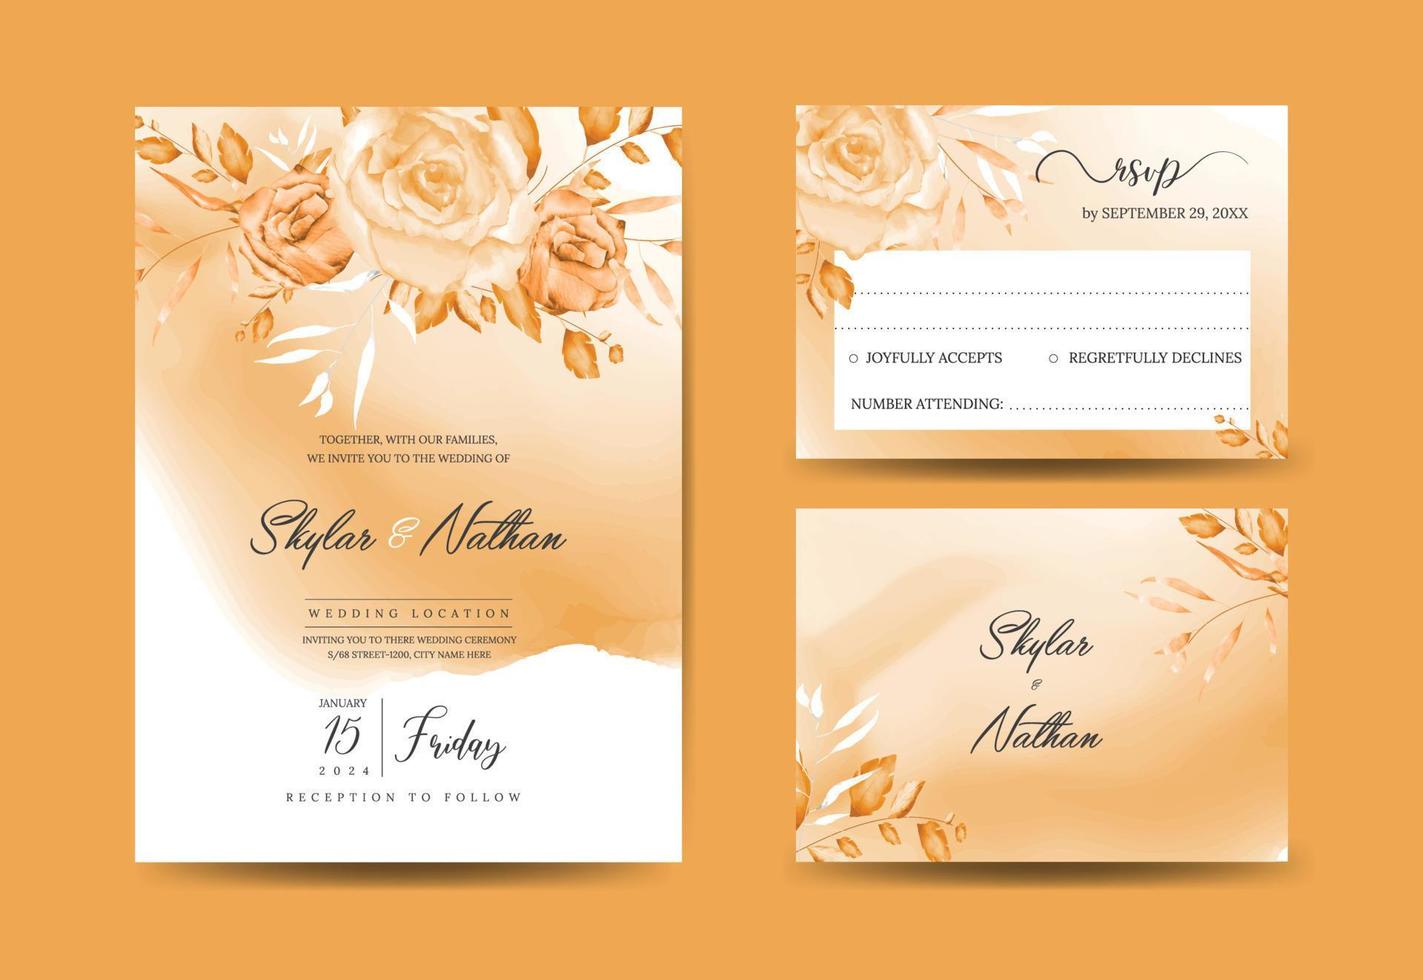 elegante tarjeta de boda de follaje floral de terracota y plantillas de tarjeta rsvp vector